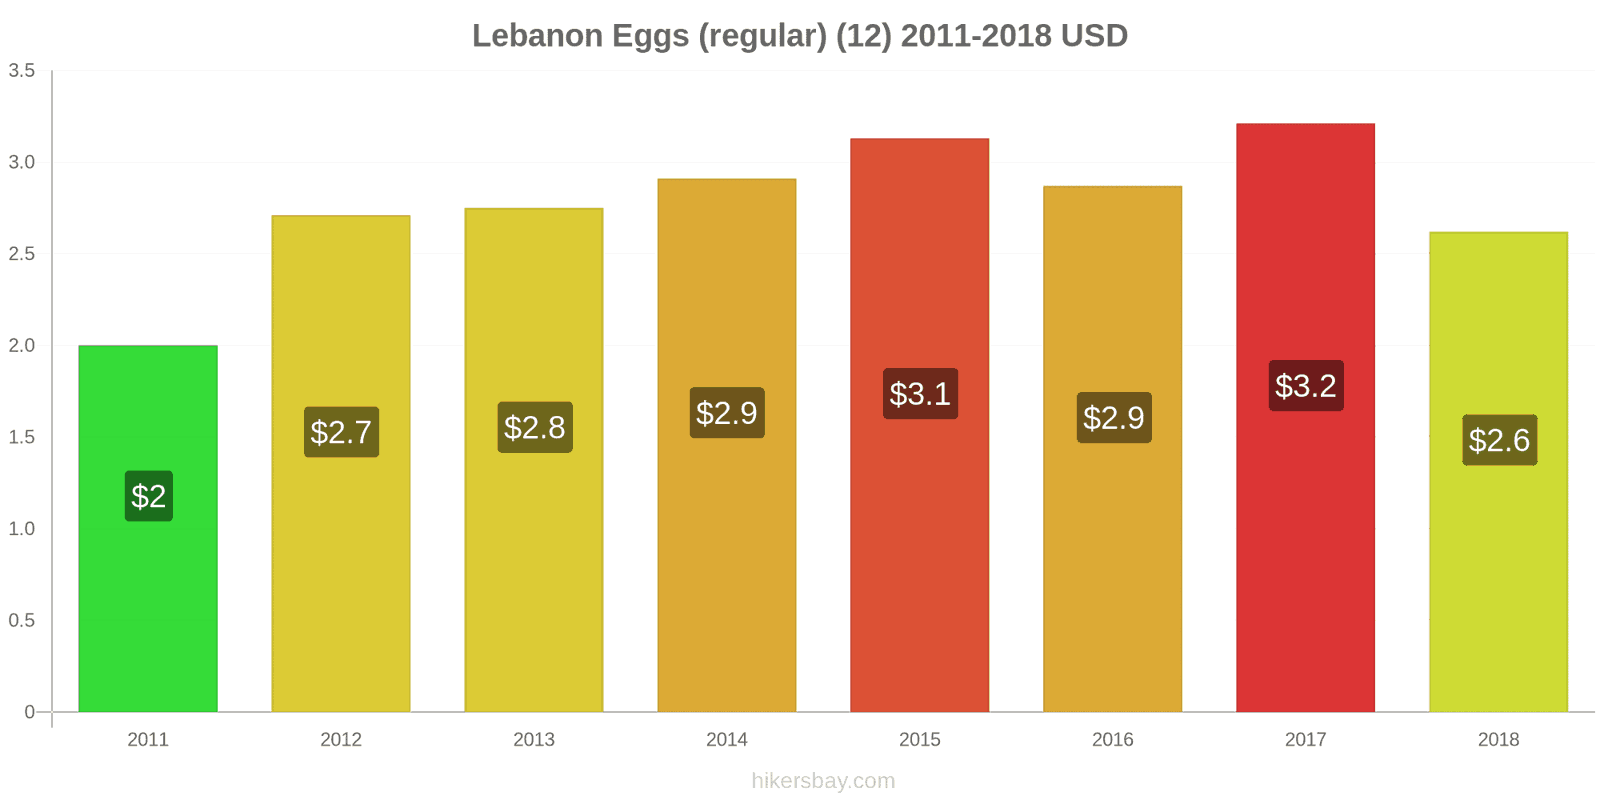 Lebanon price changes Eggs (regular) (12) hikersbay.com